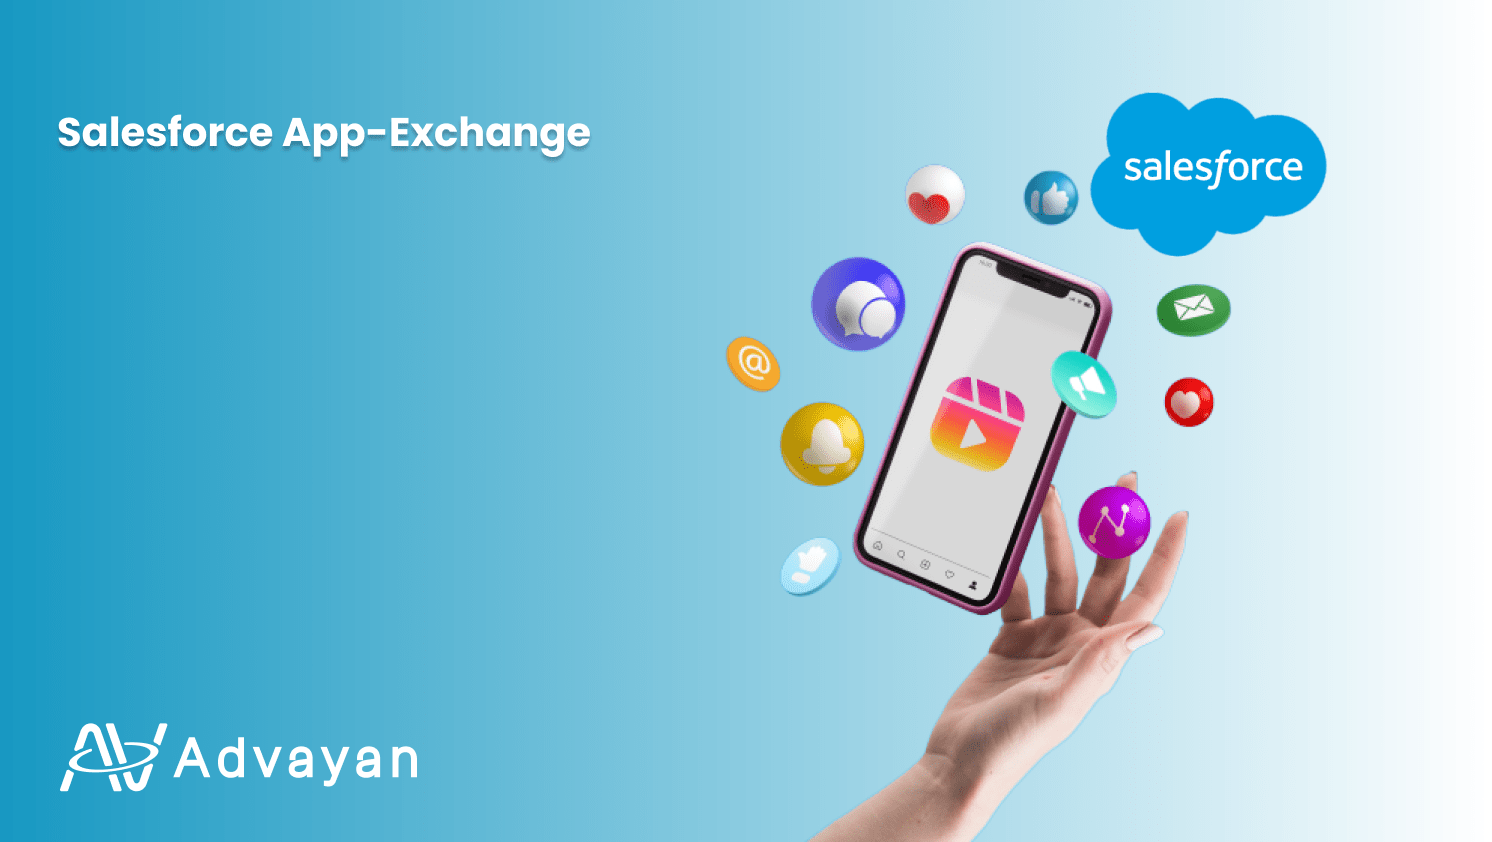 What is Salesforce App-Exchange?